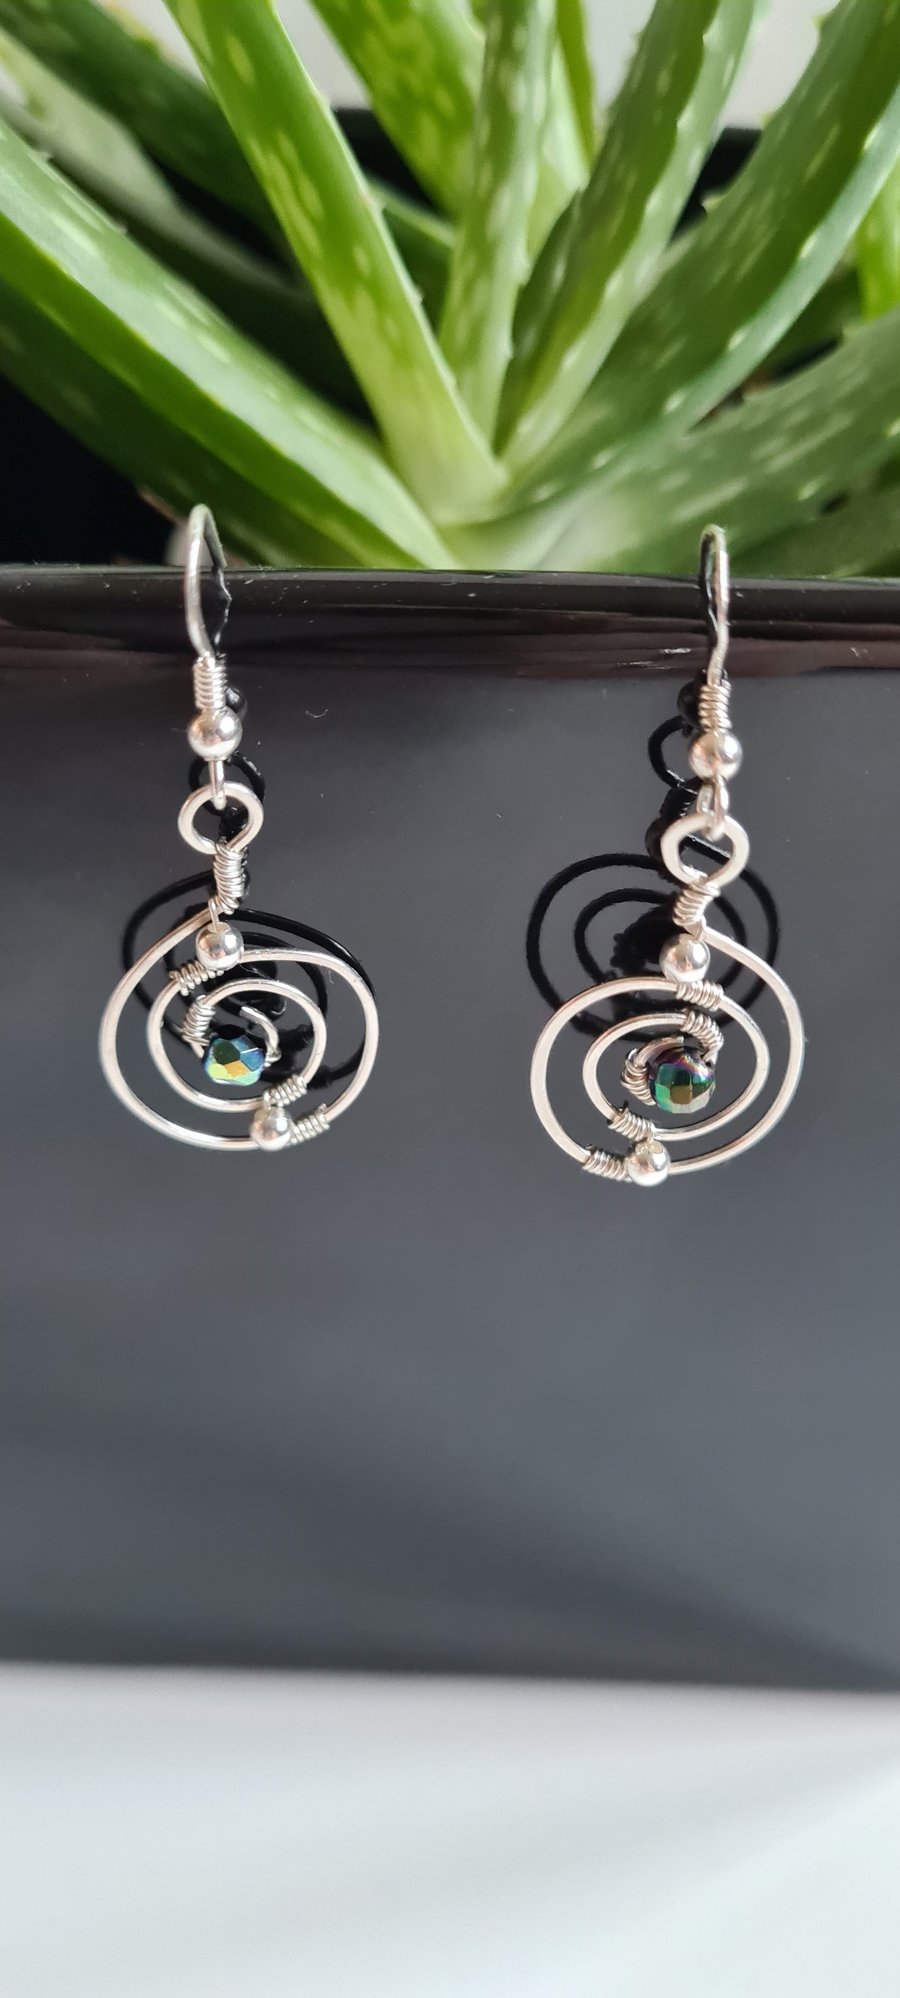 Handmade Artisan 925 Silver Swirl Circle Earrings Gift Boxed Jewellery Jewelry